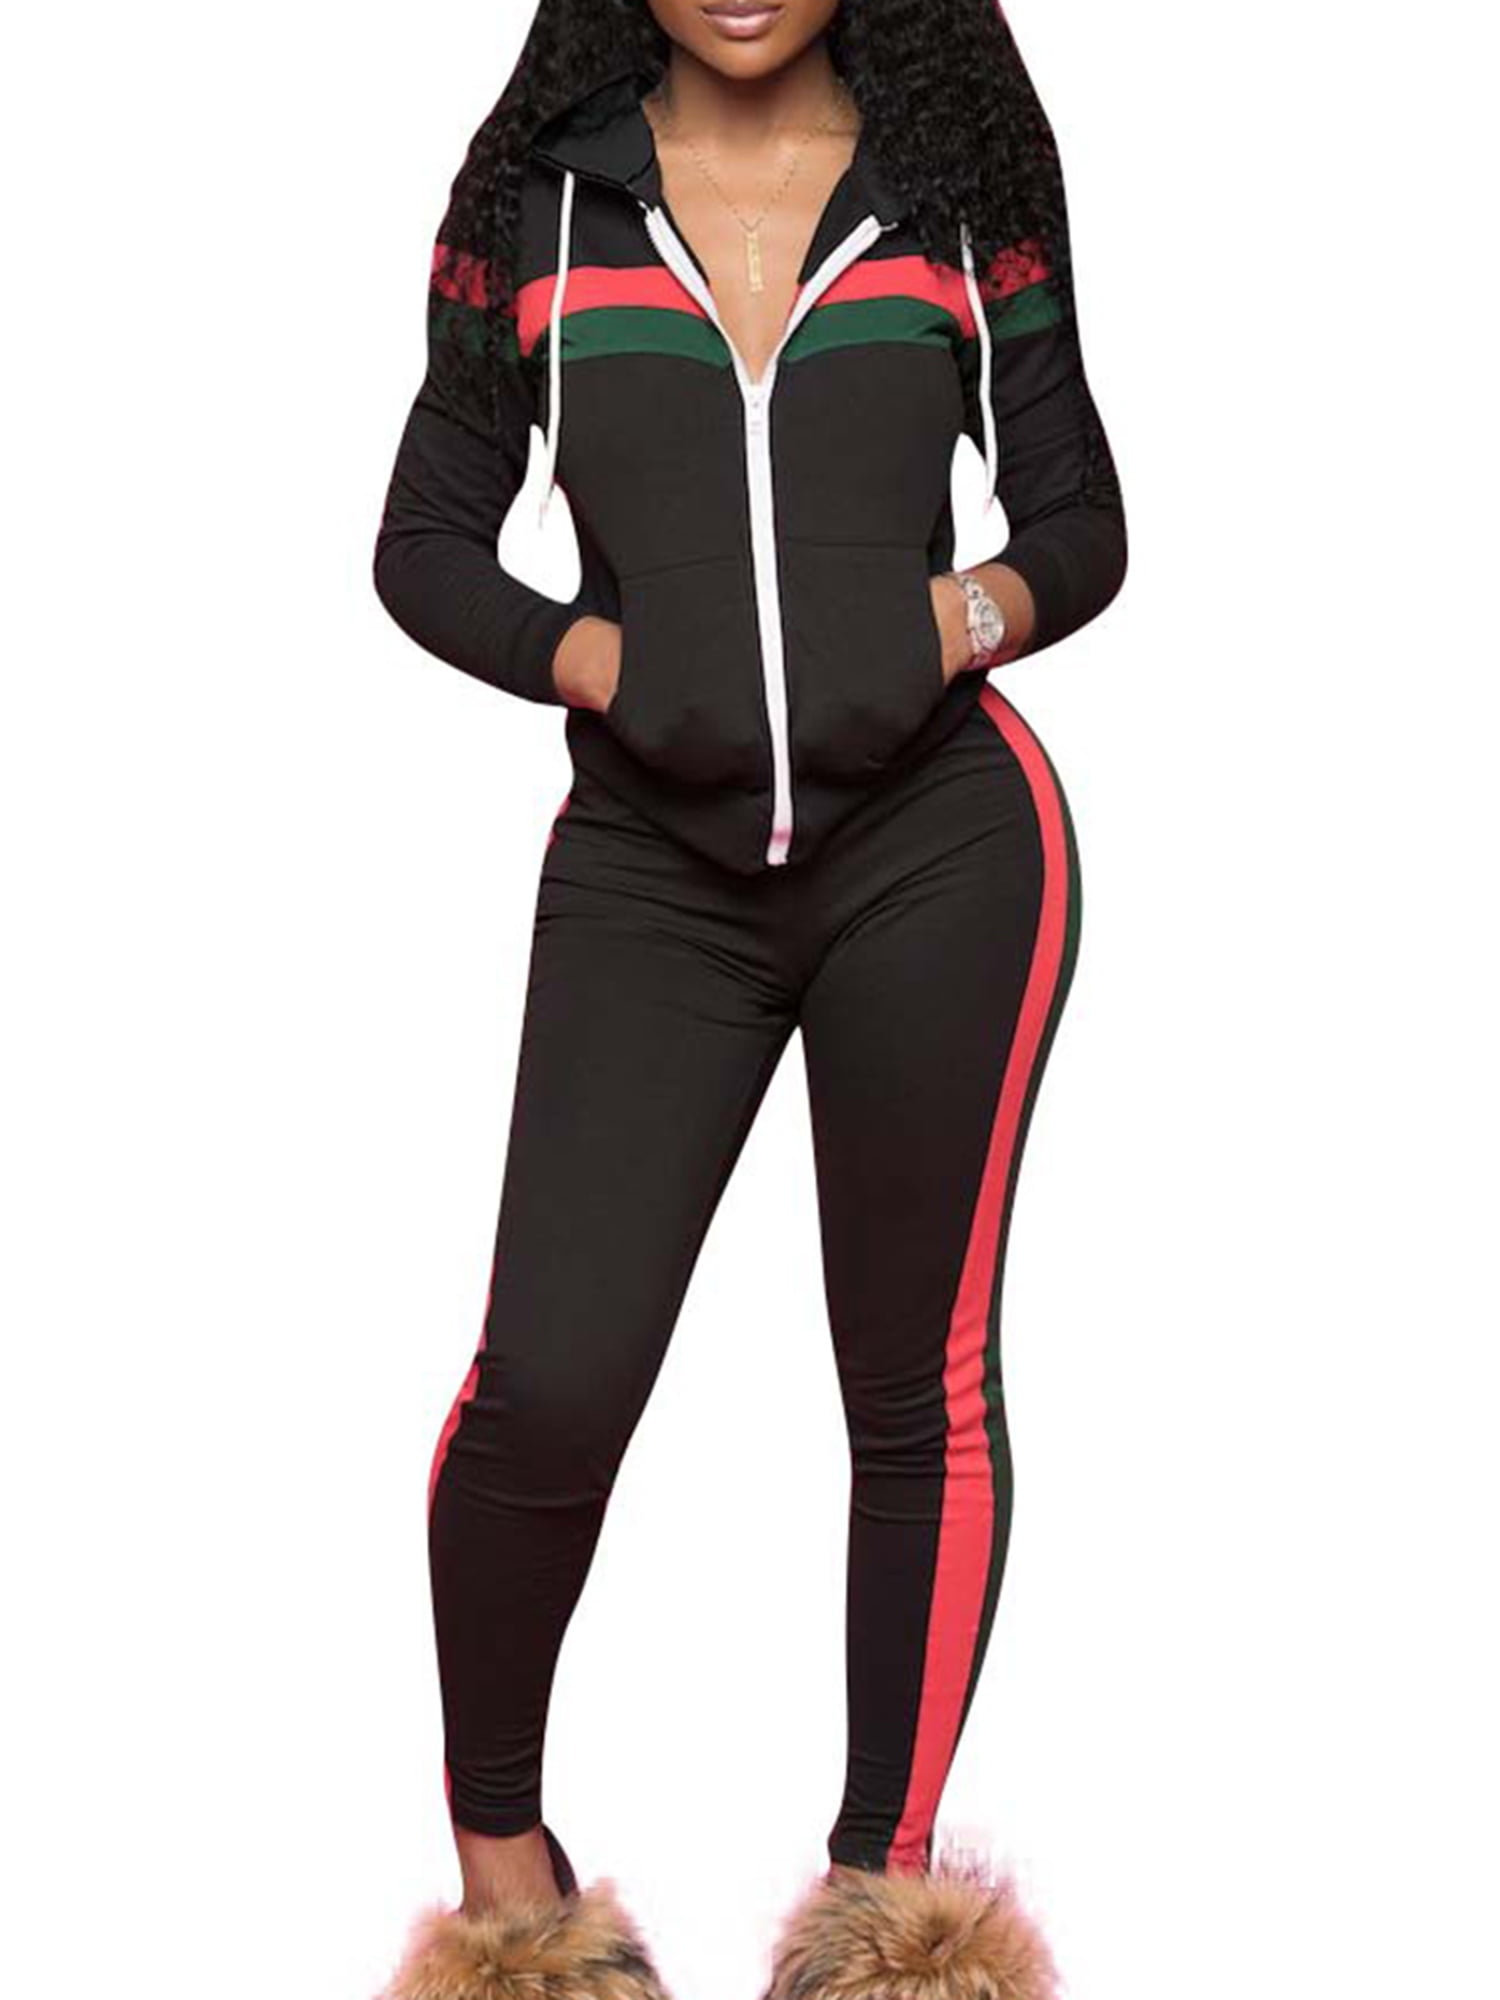 Long Pants Tracksuit Set Jumpsuits Two Piece Sweatsuit Pullover Hoodies Top Jogging Suits for Women